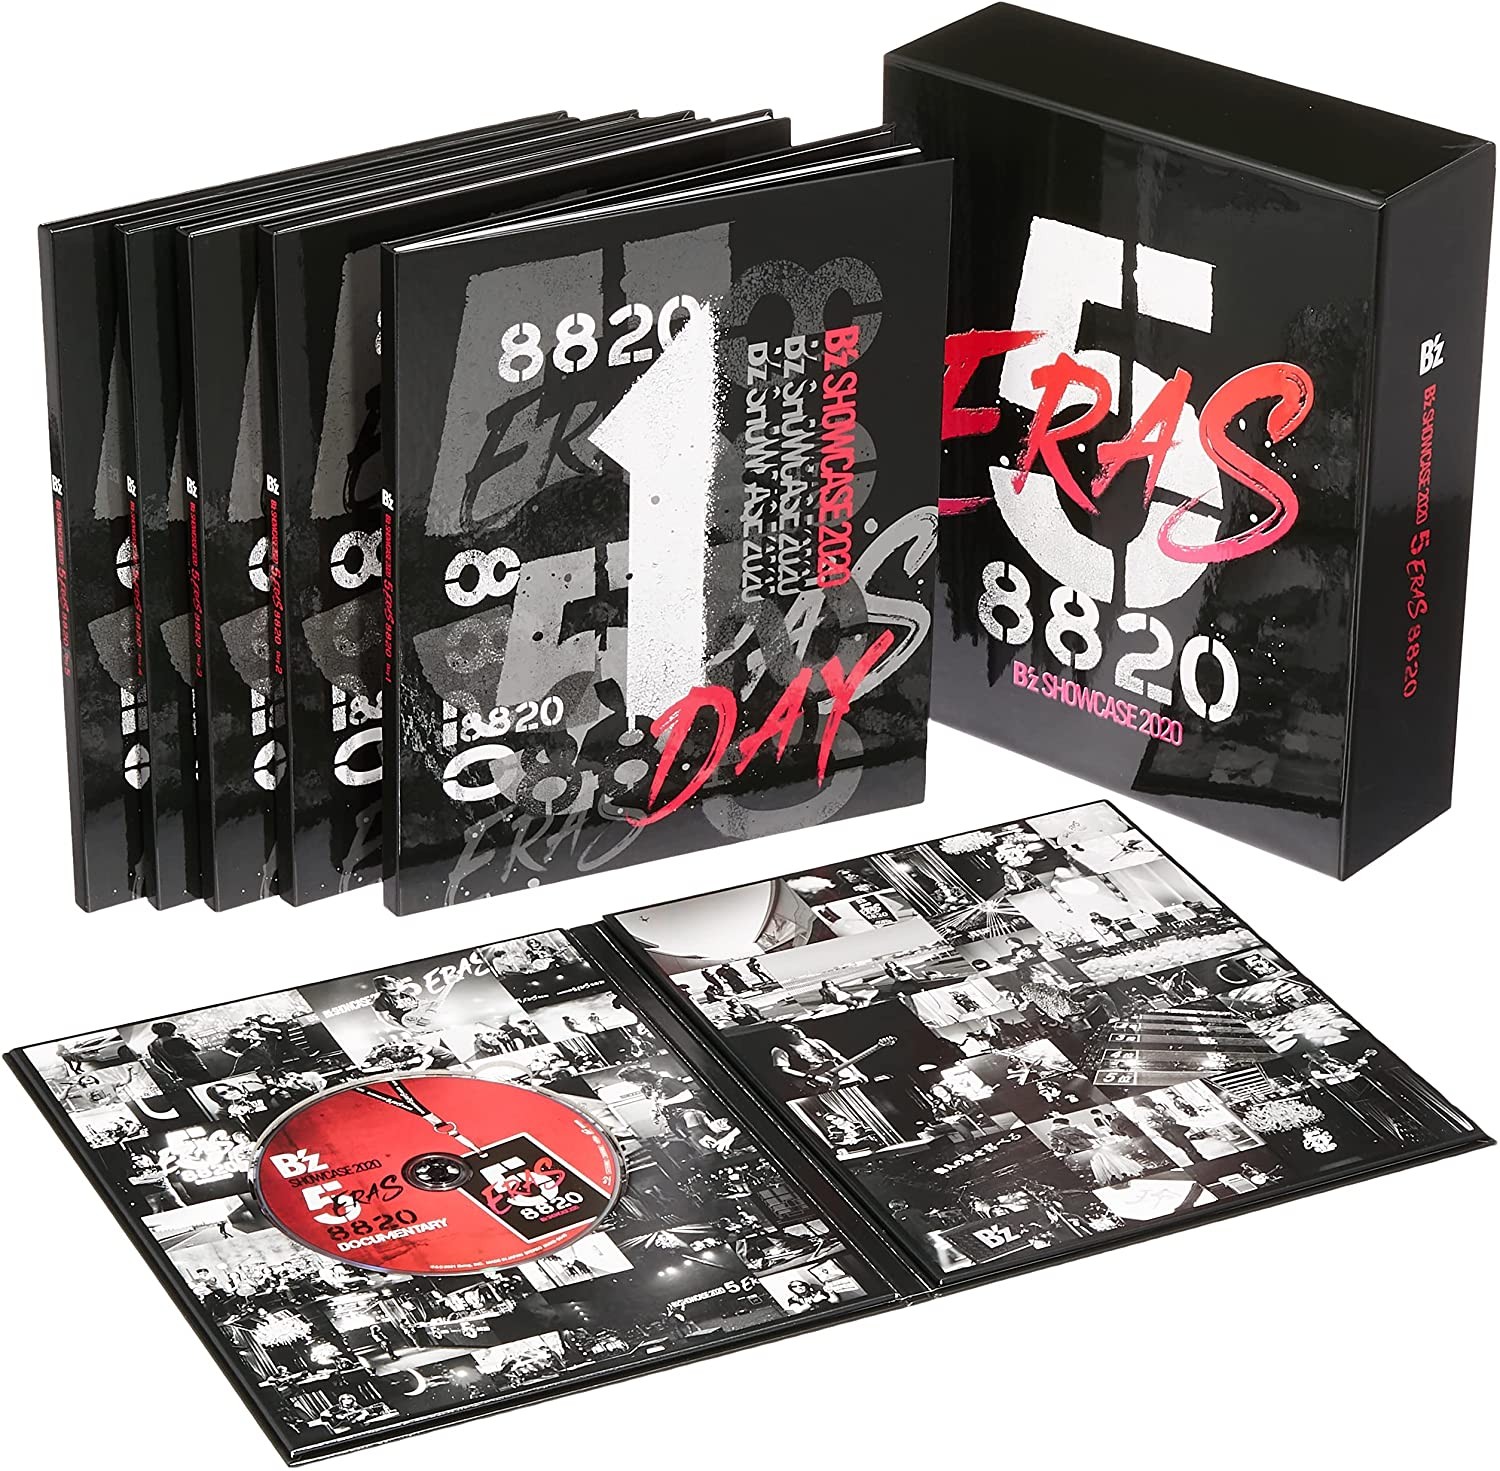 B'z – B'z SHOWCASE 2020 -5 ERAS 8820- Day1~5 COMPLETE BOX [Blu-ray 